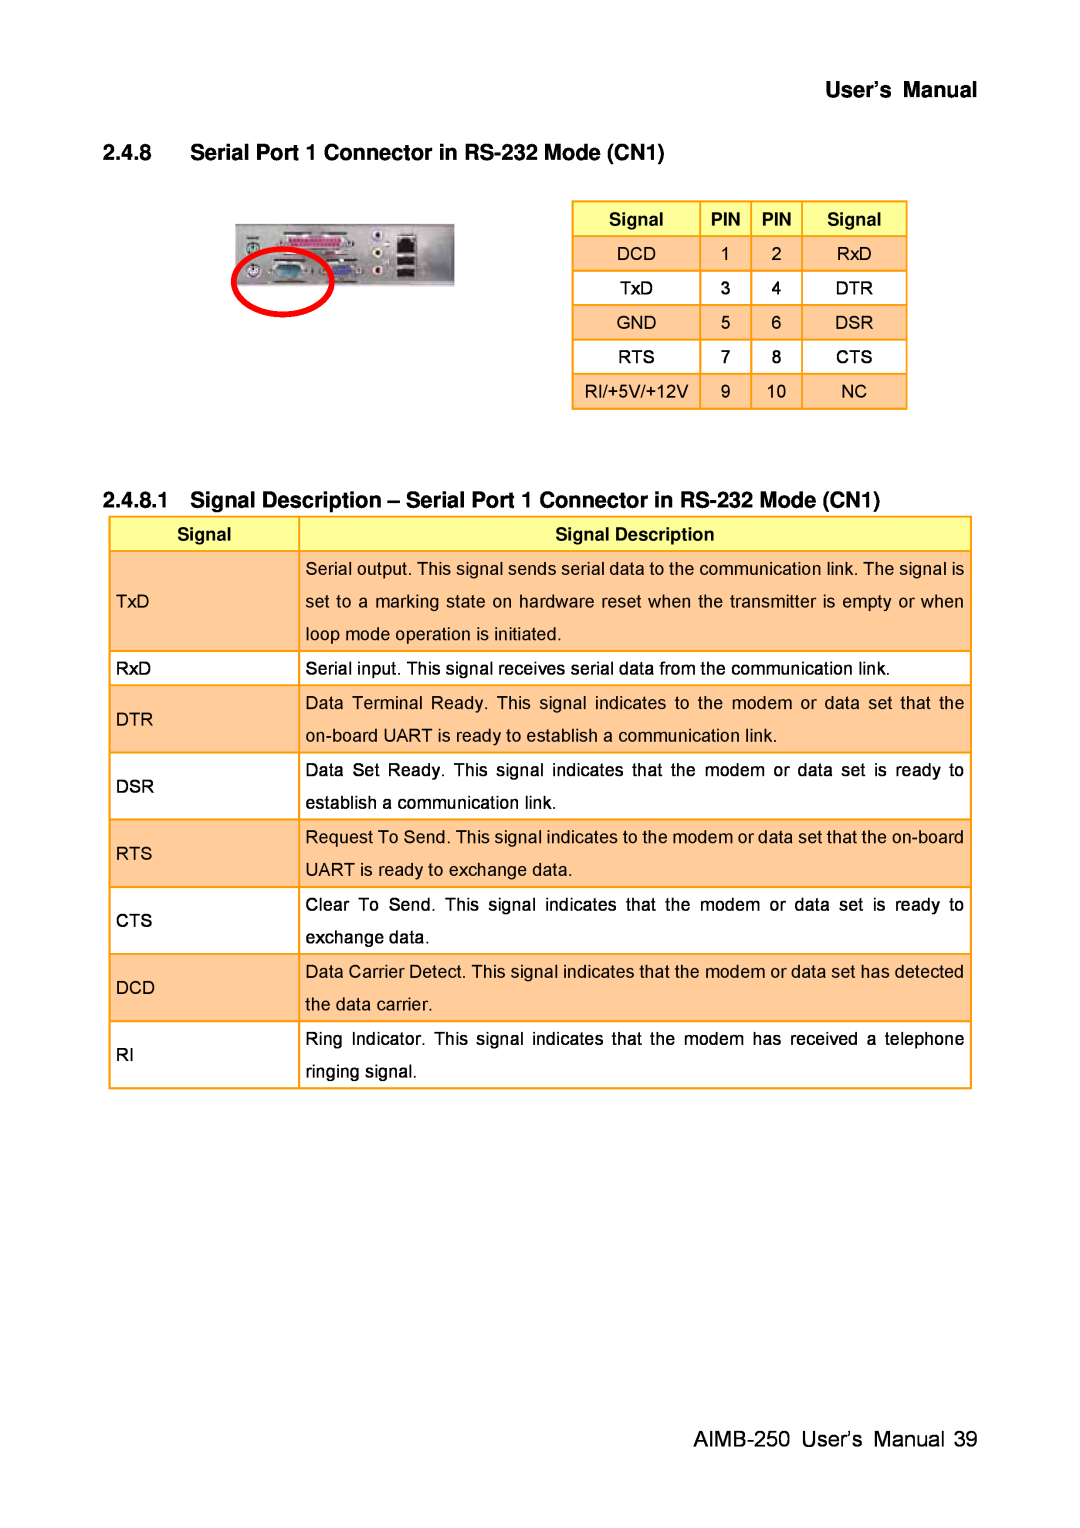 Advantech user manual Serial Port 1 Connector in RS-232 Mode CN1, AIMB-250 User’s Manual, Signal Description 